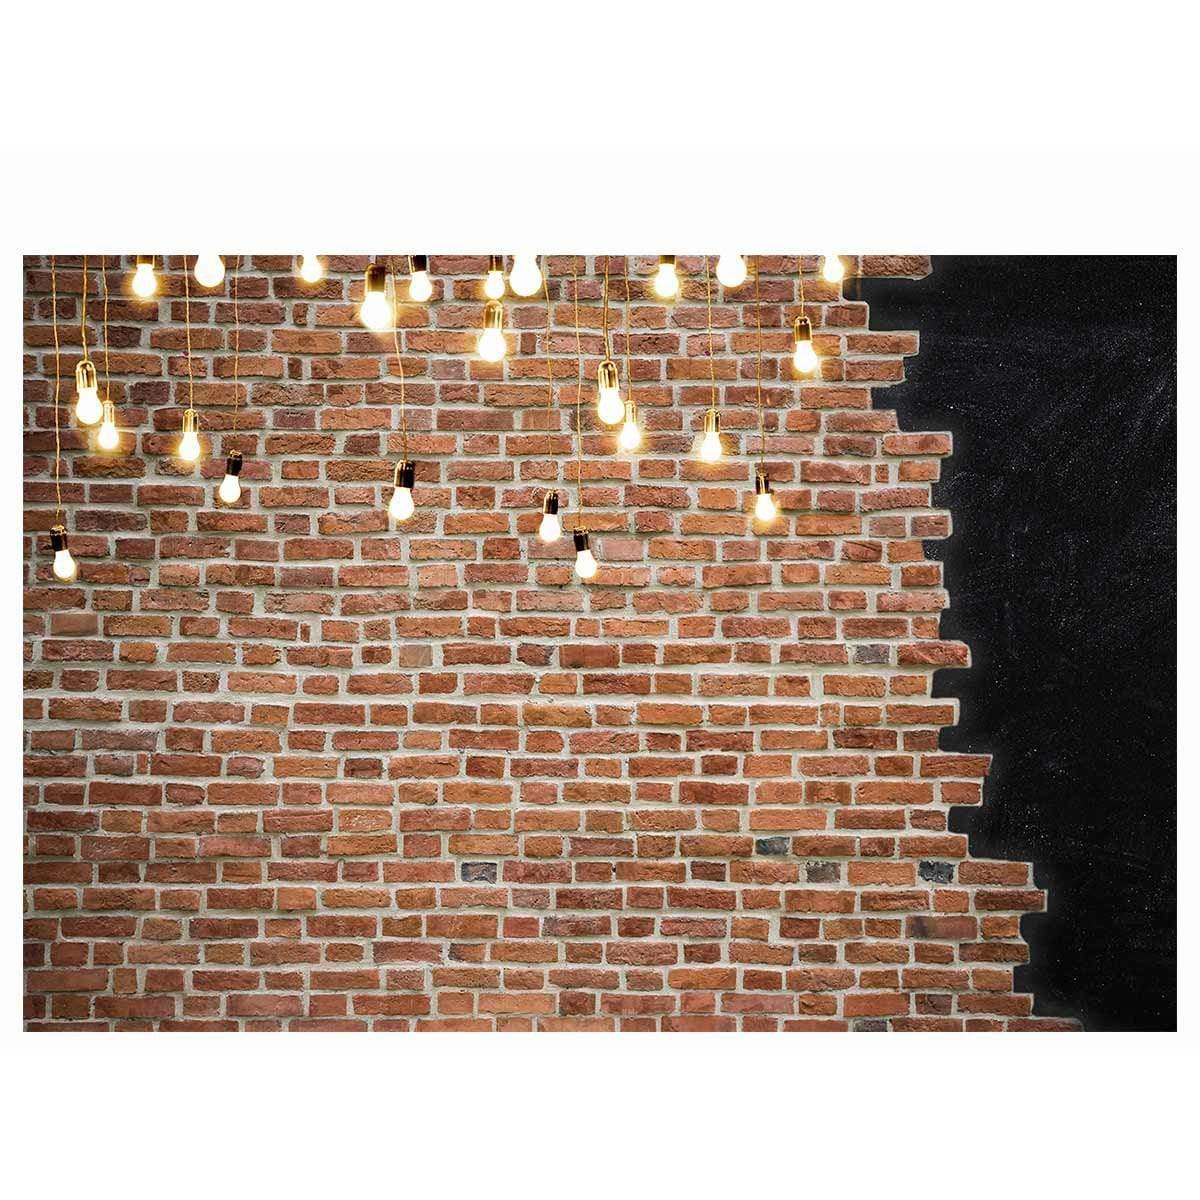 Allenjoy Brick Wall with Shiny Light Backdrop - Allenjoystudio